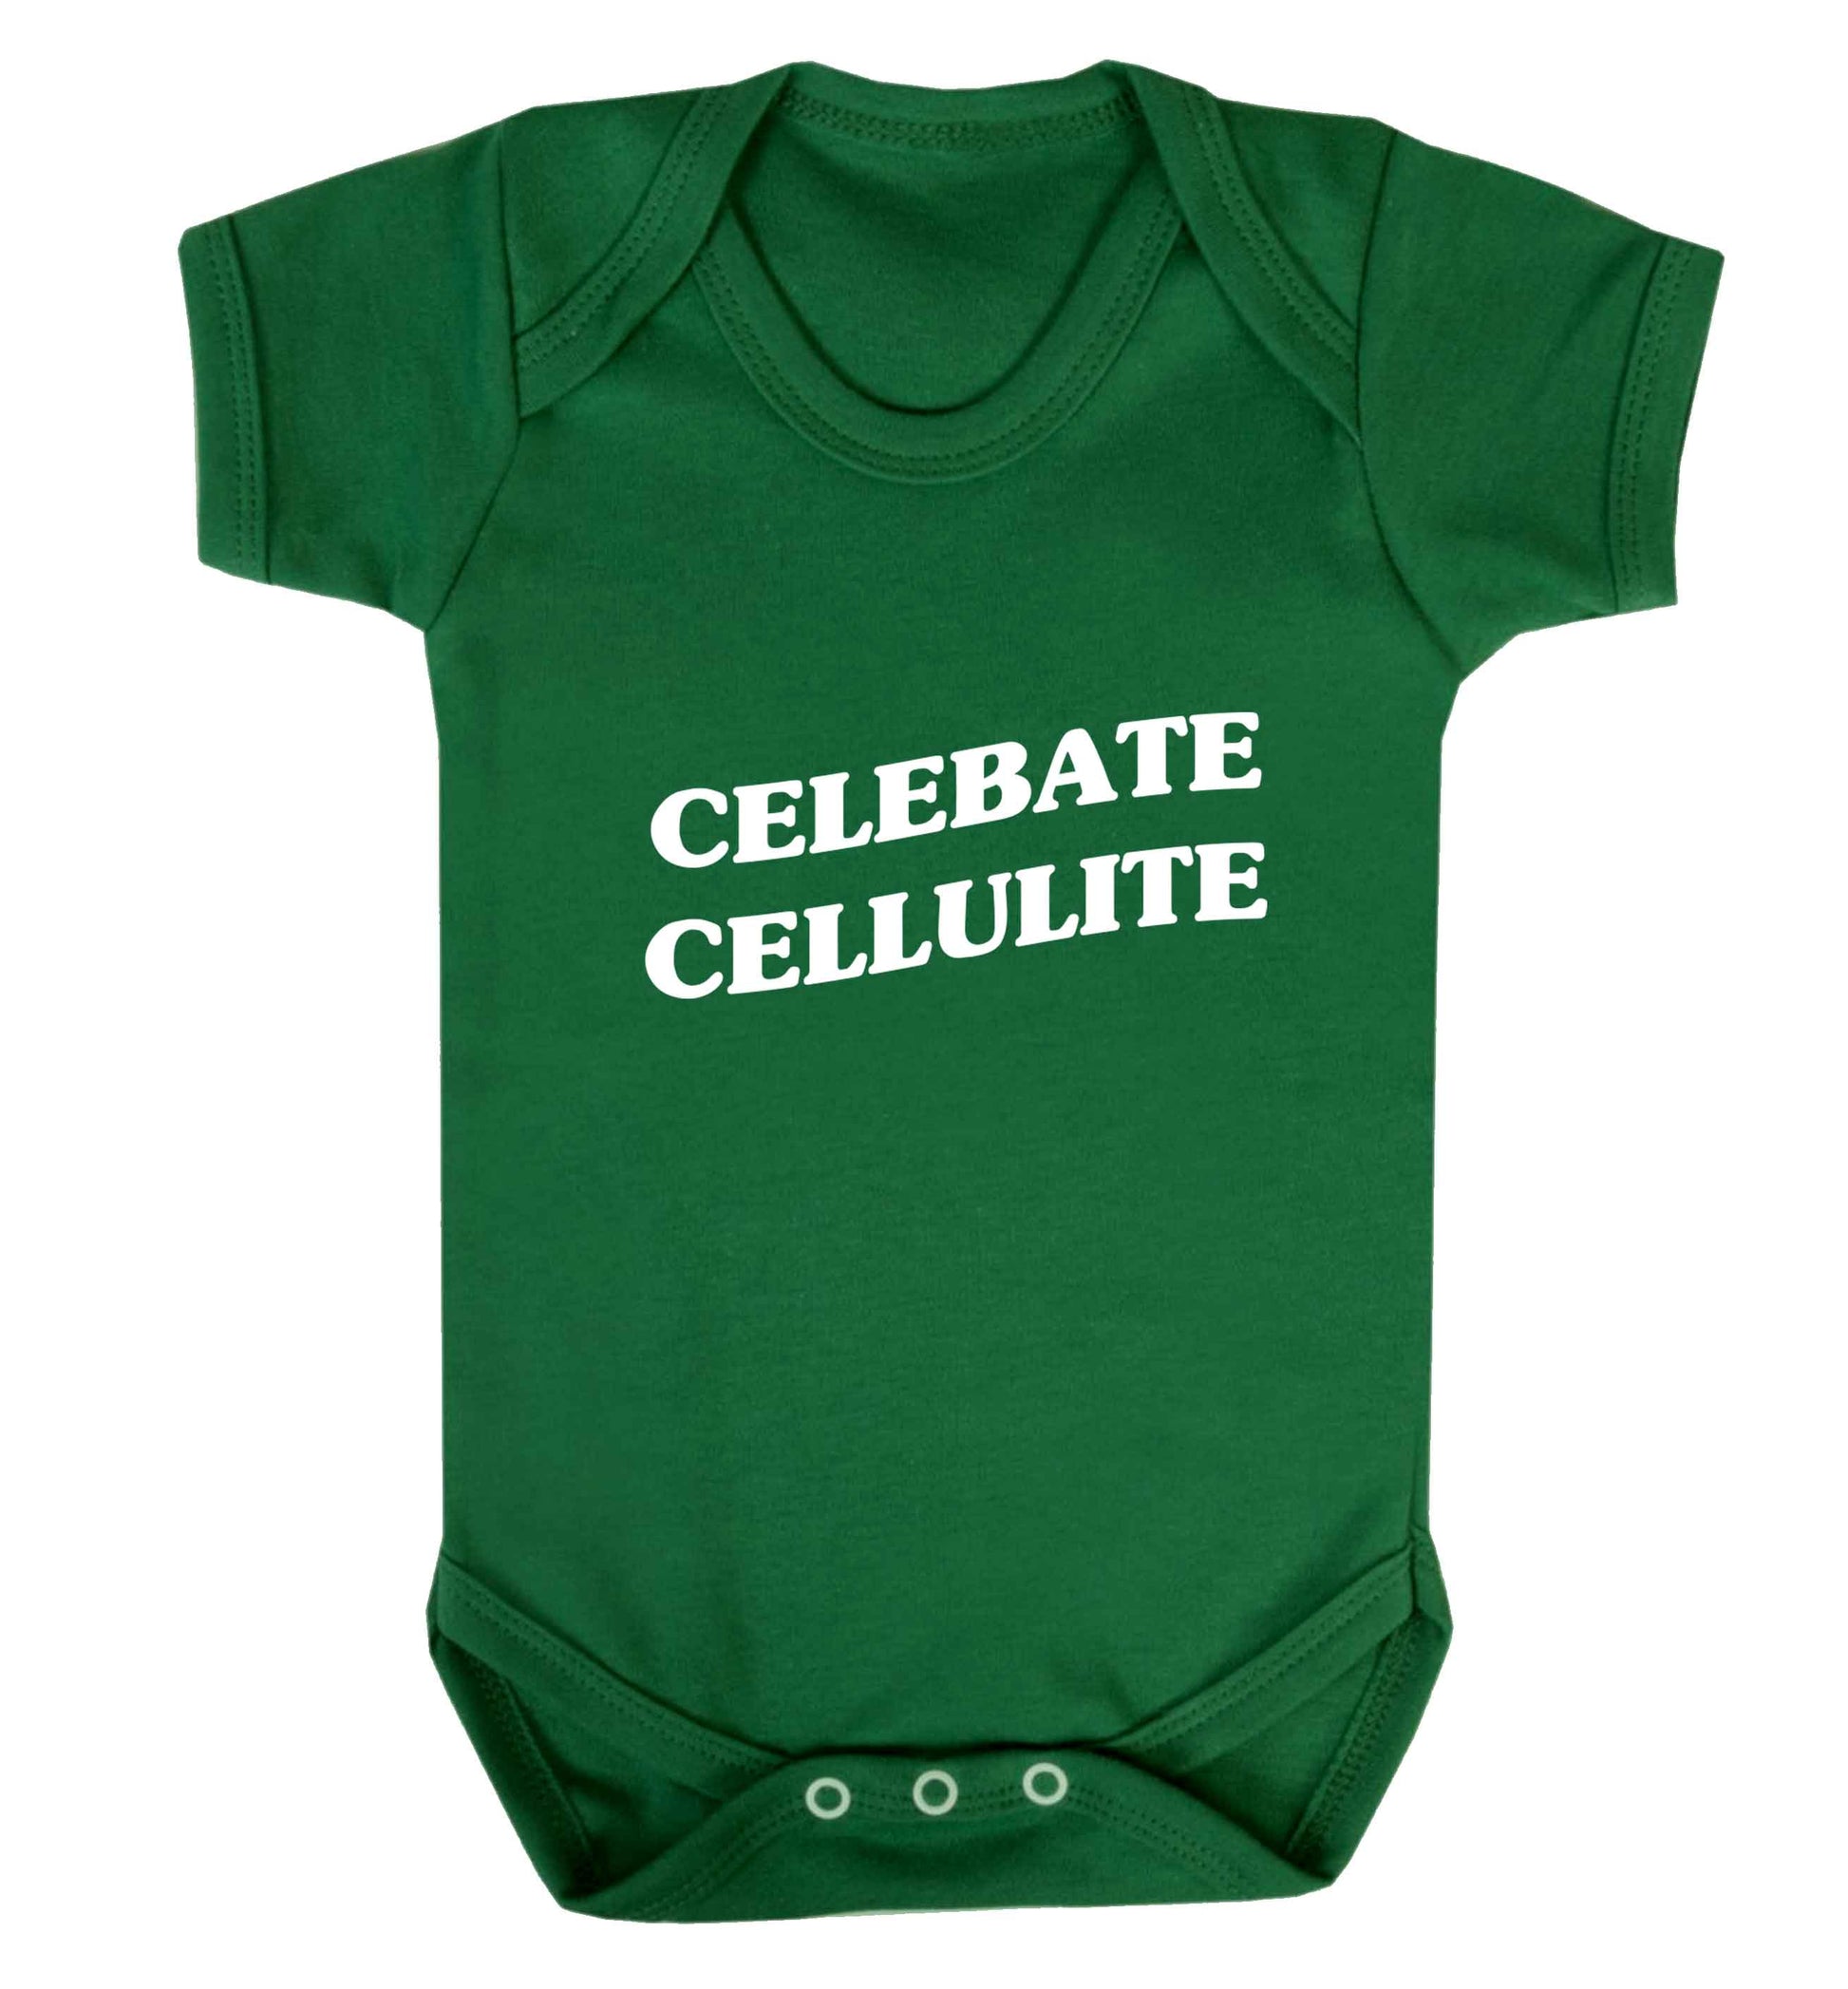 Celebrate cellulite baby vest green 18-24 months